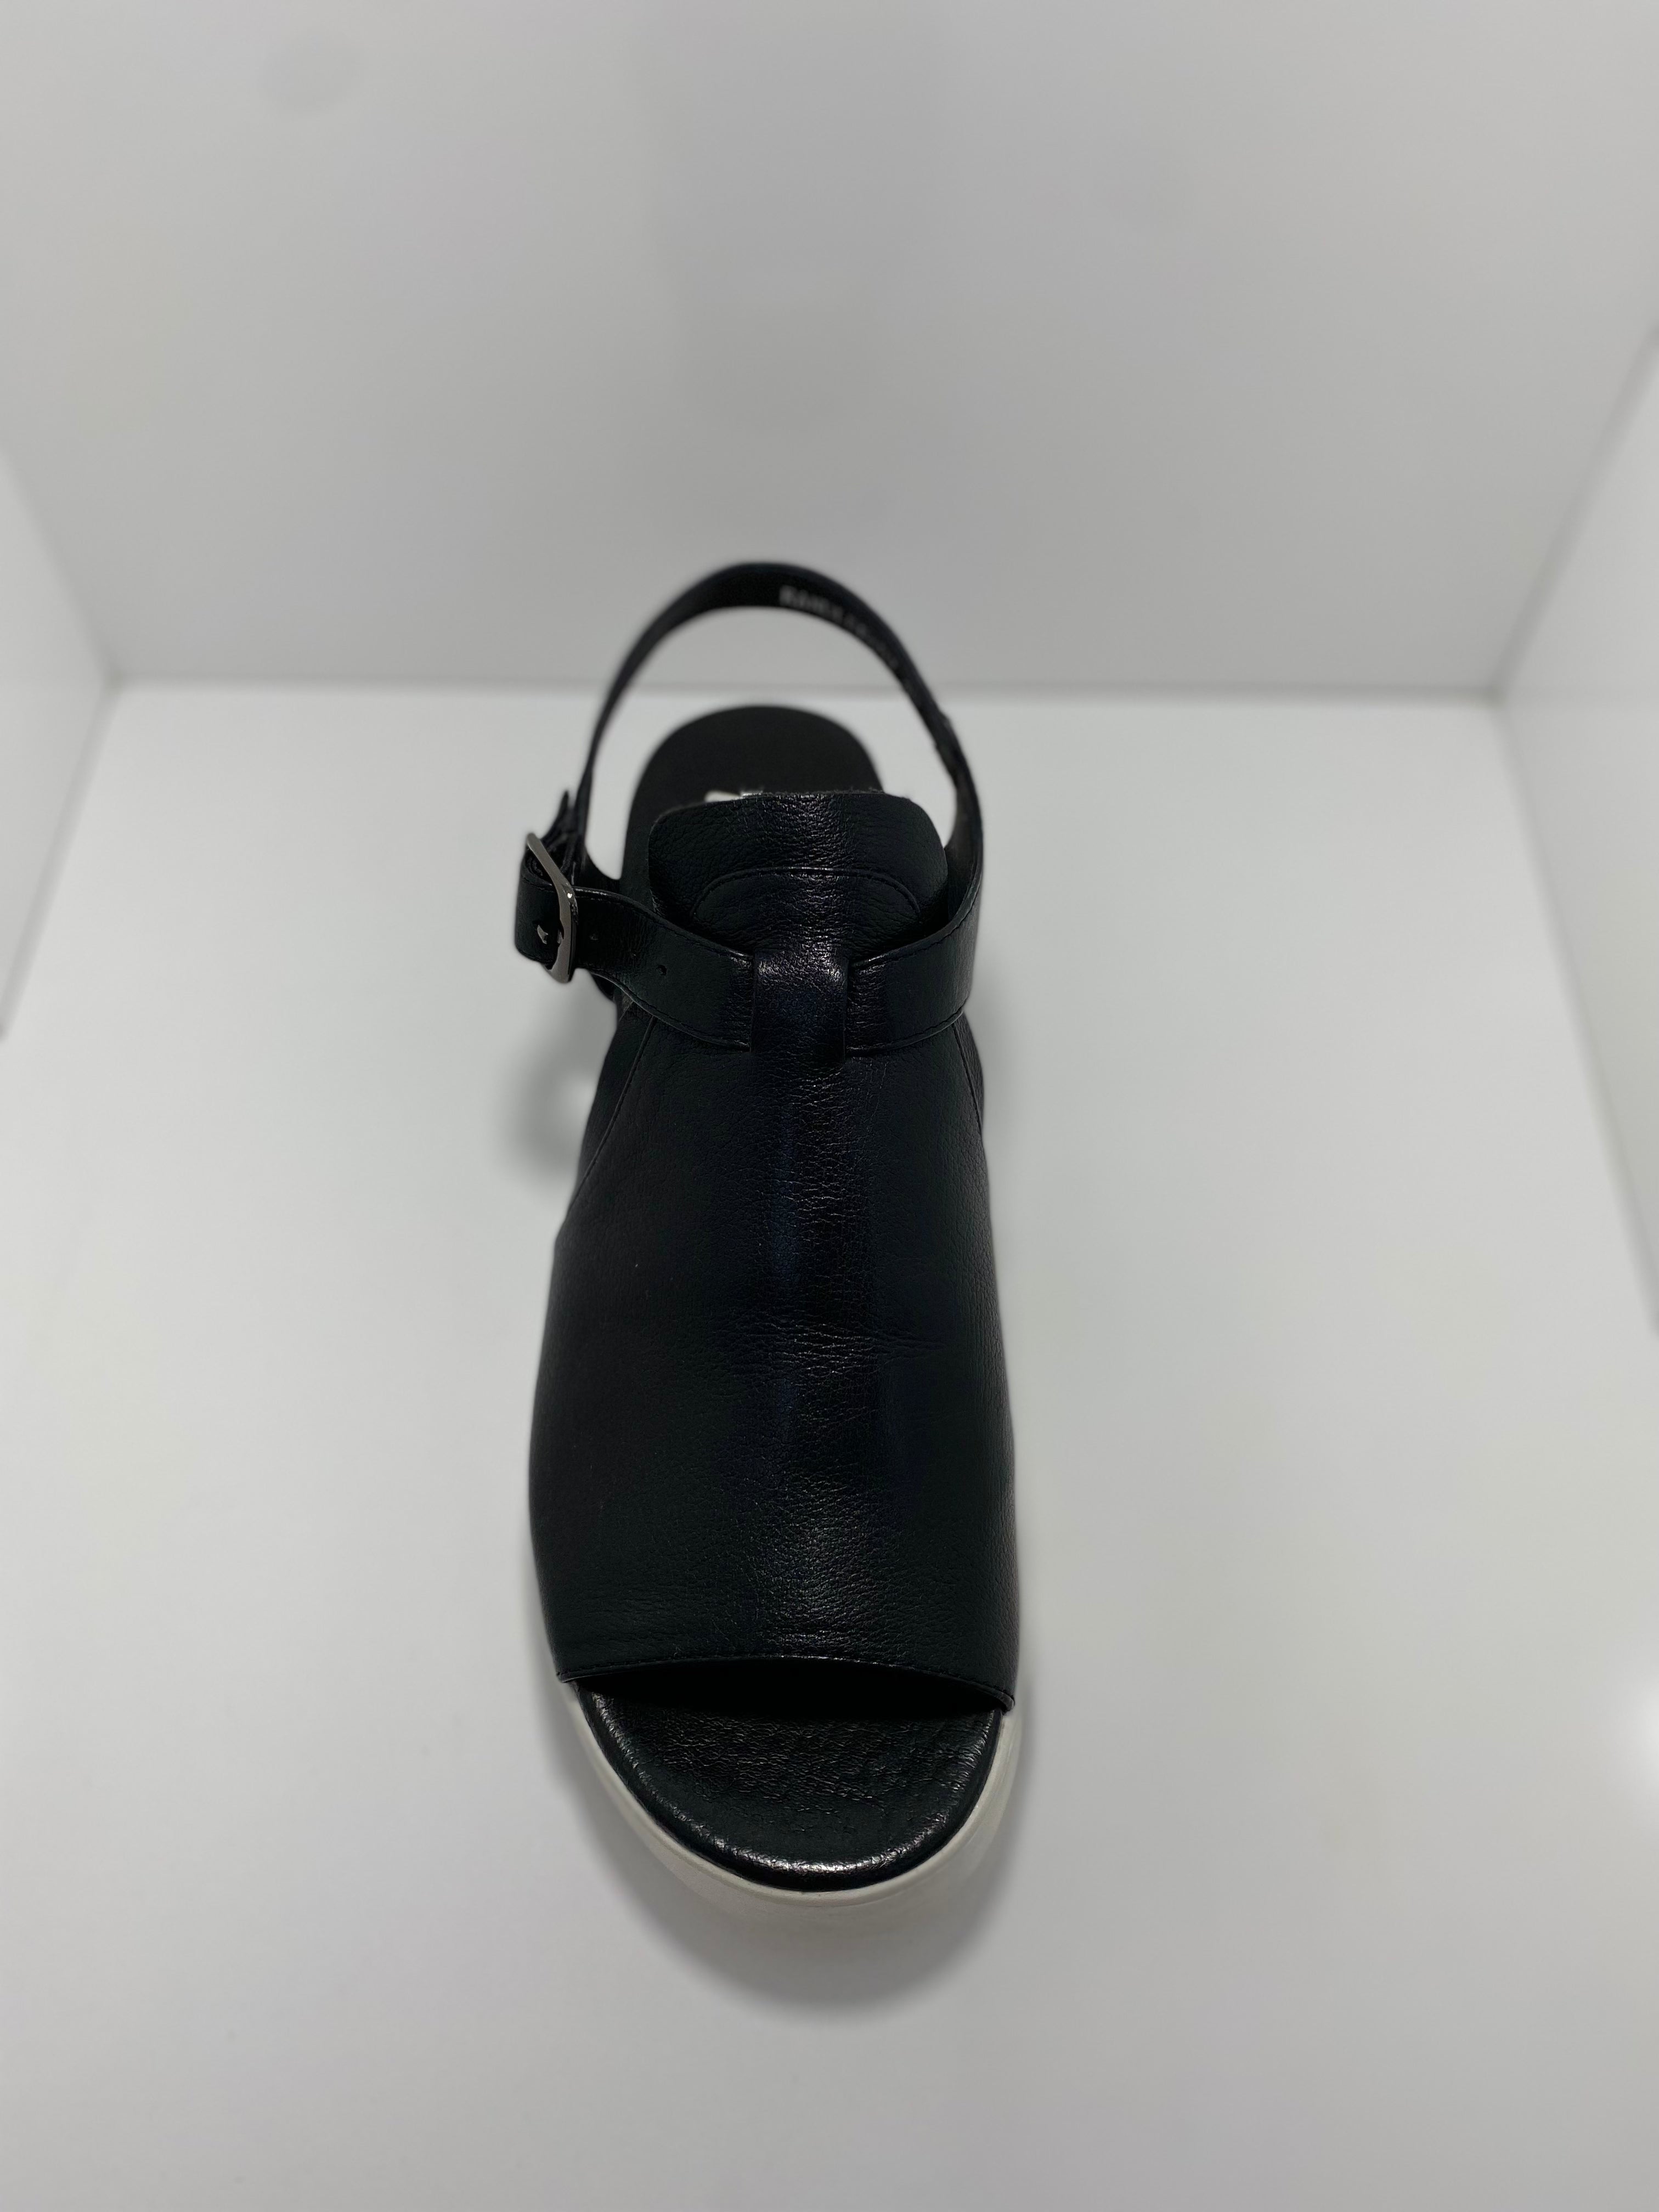 Randlee Wedge Leather Sandal